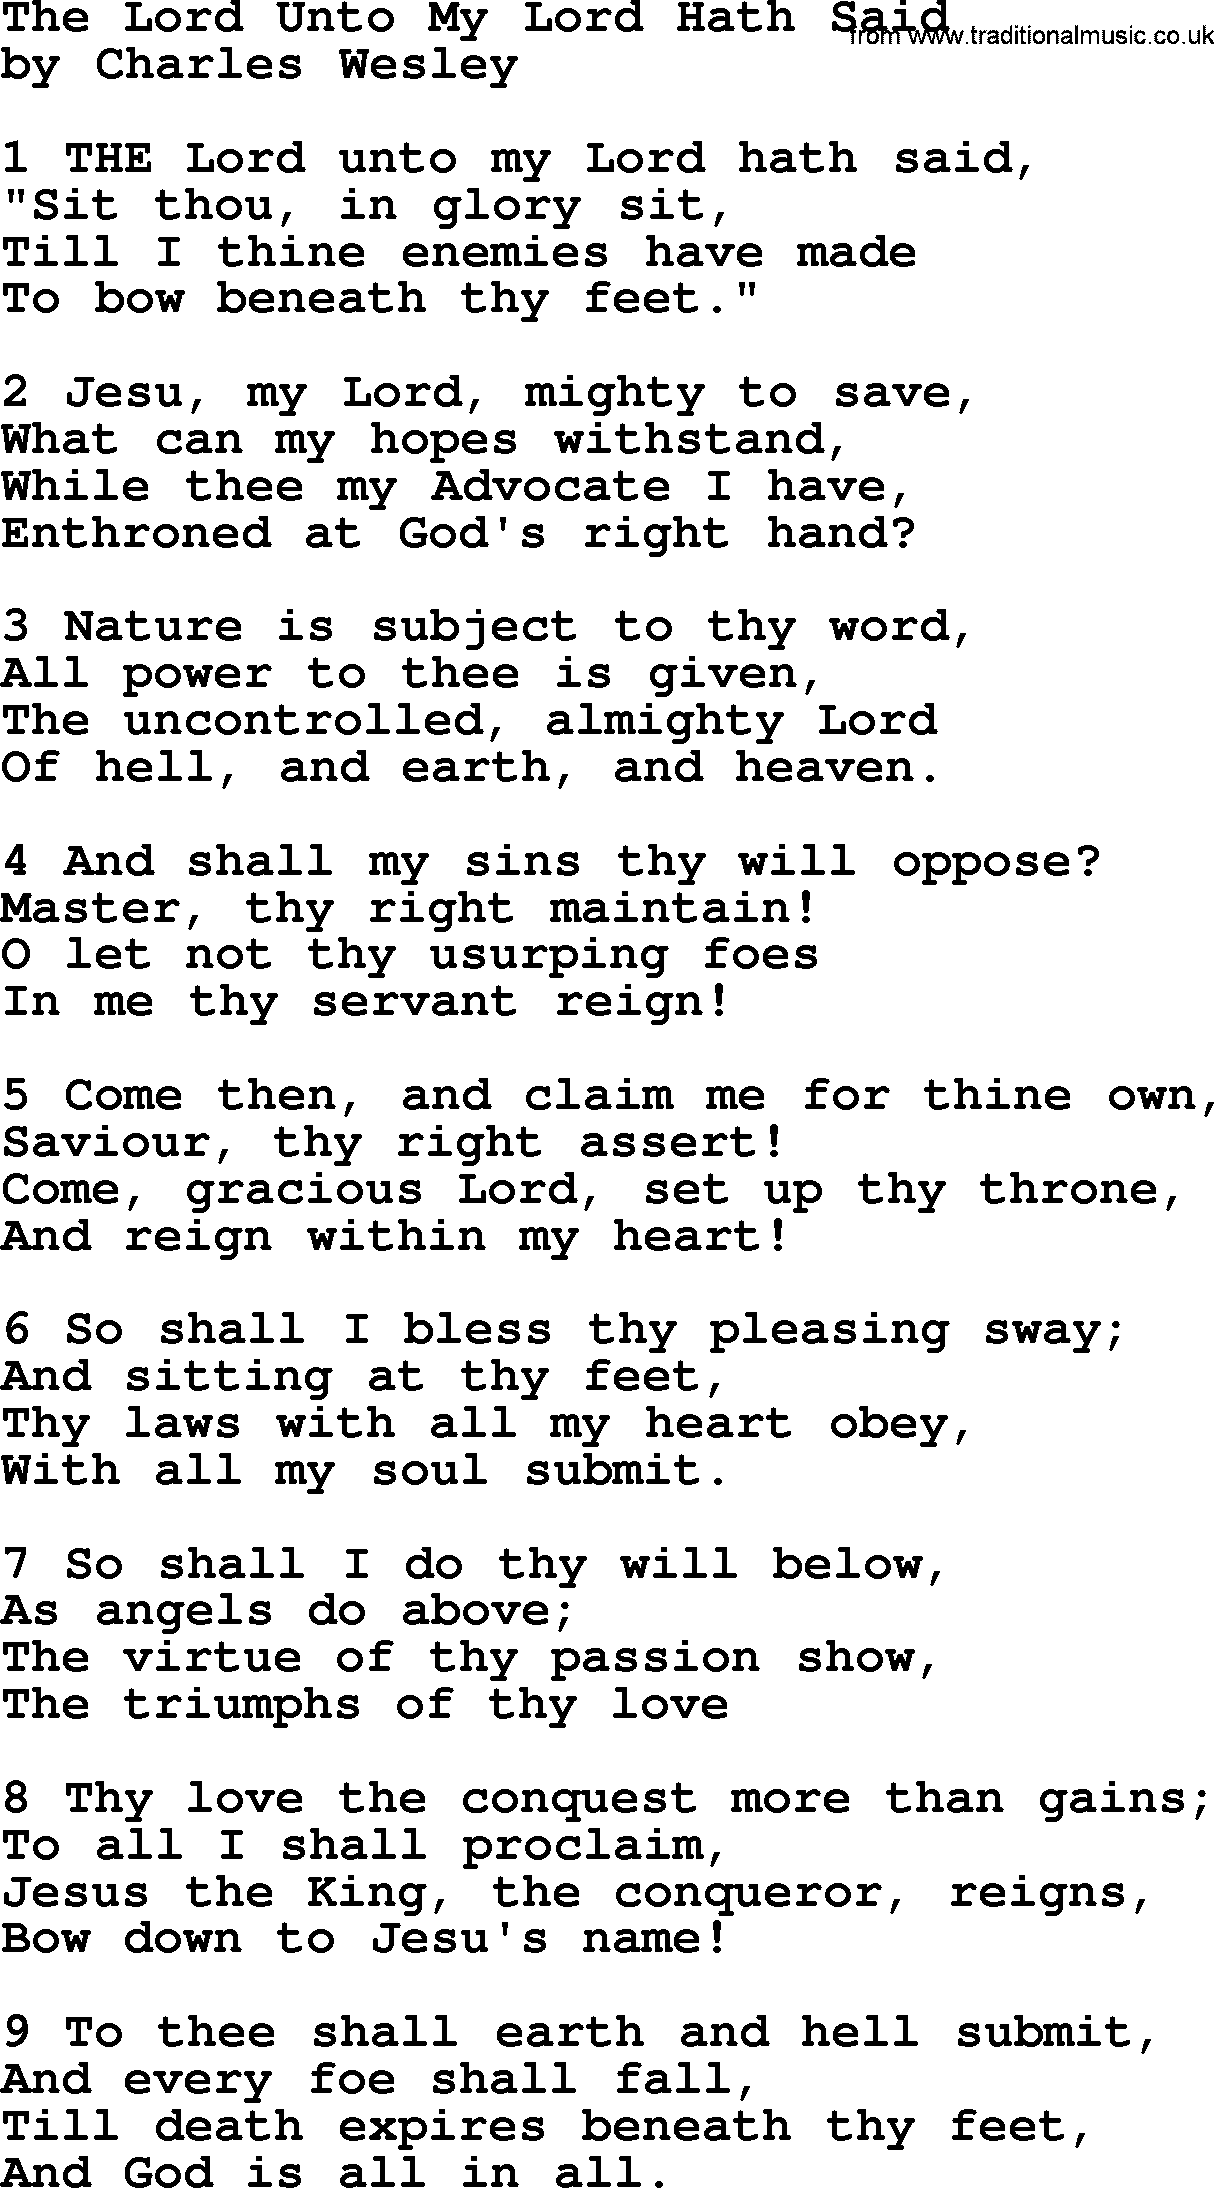 Charles Wesley hymn: The Lord Unto My Lord Hath Said, lyrics